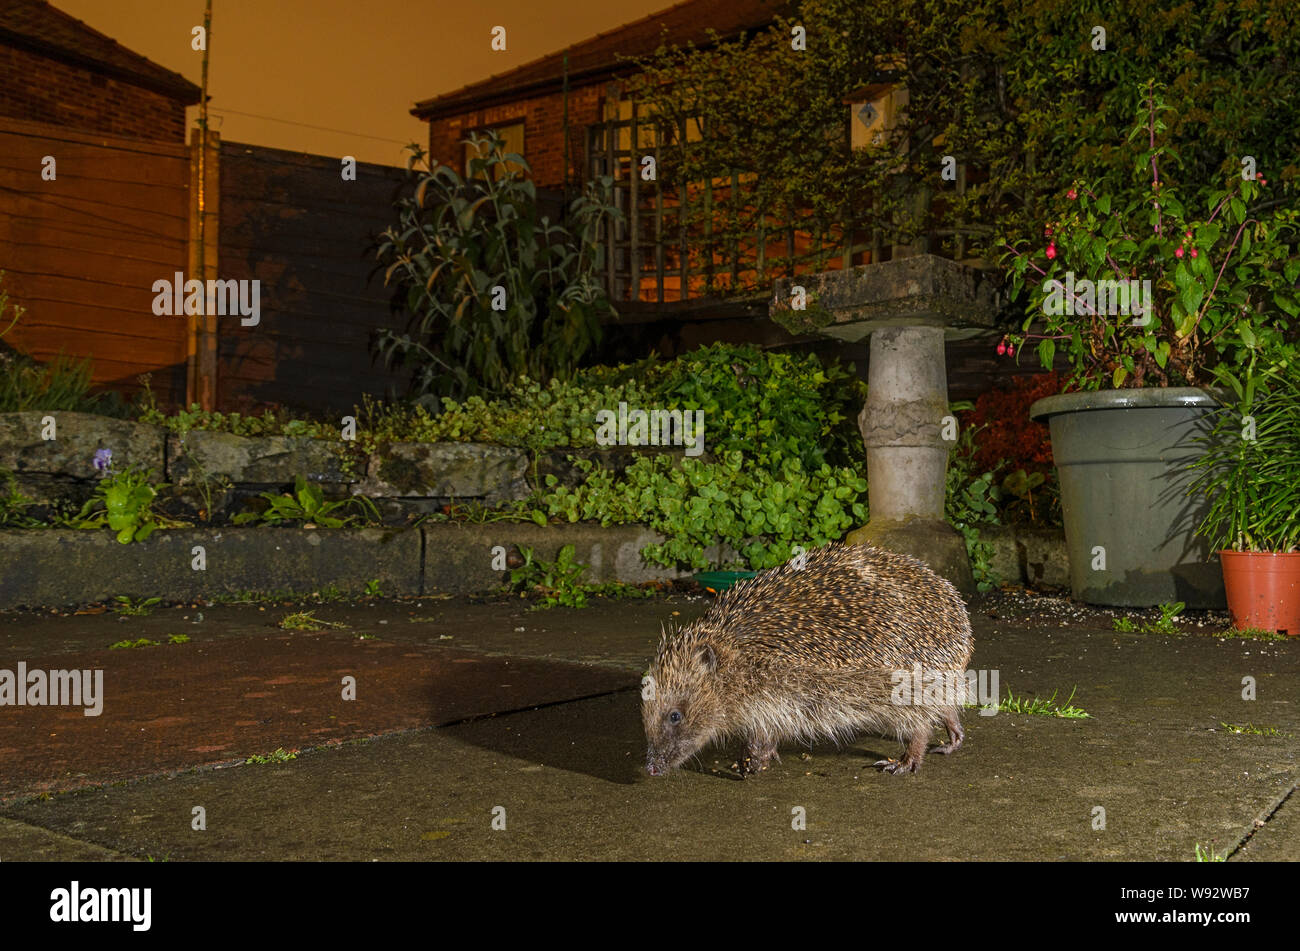 European hedgehog (Erinaceus europaeus), in urban garden, Manchester, UK. July 2018 Stock Photo